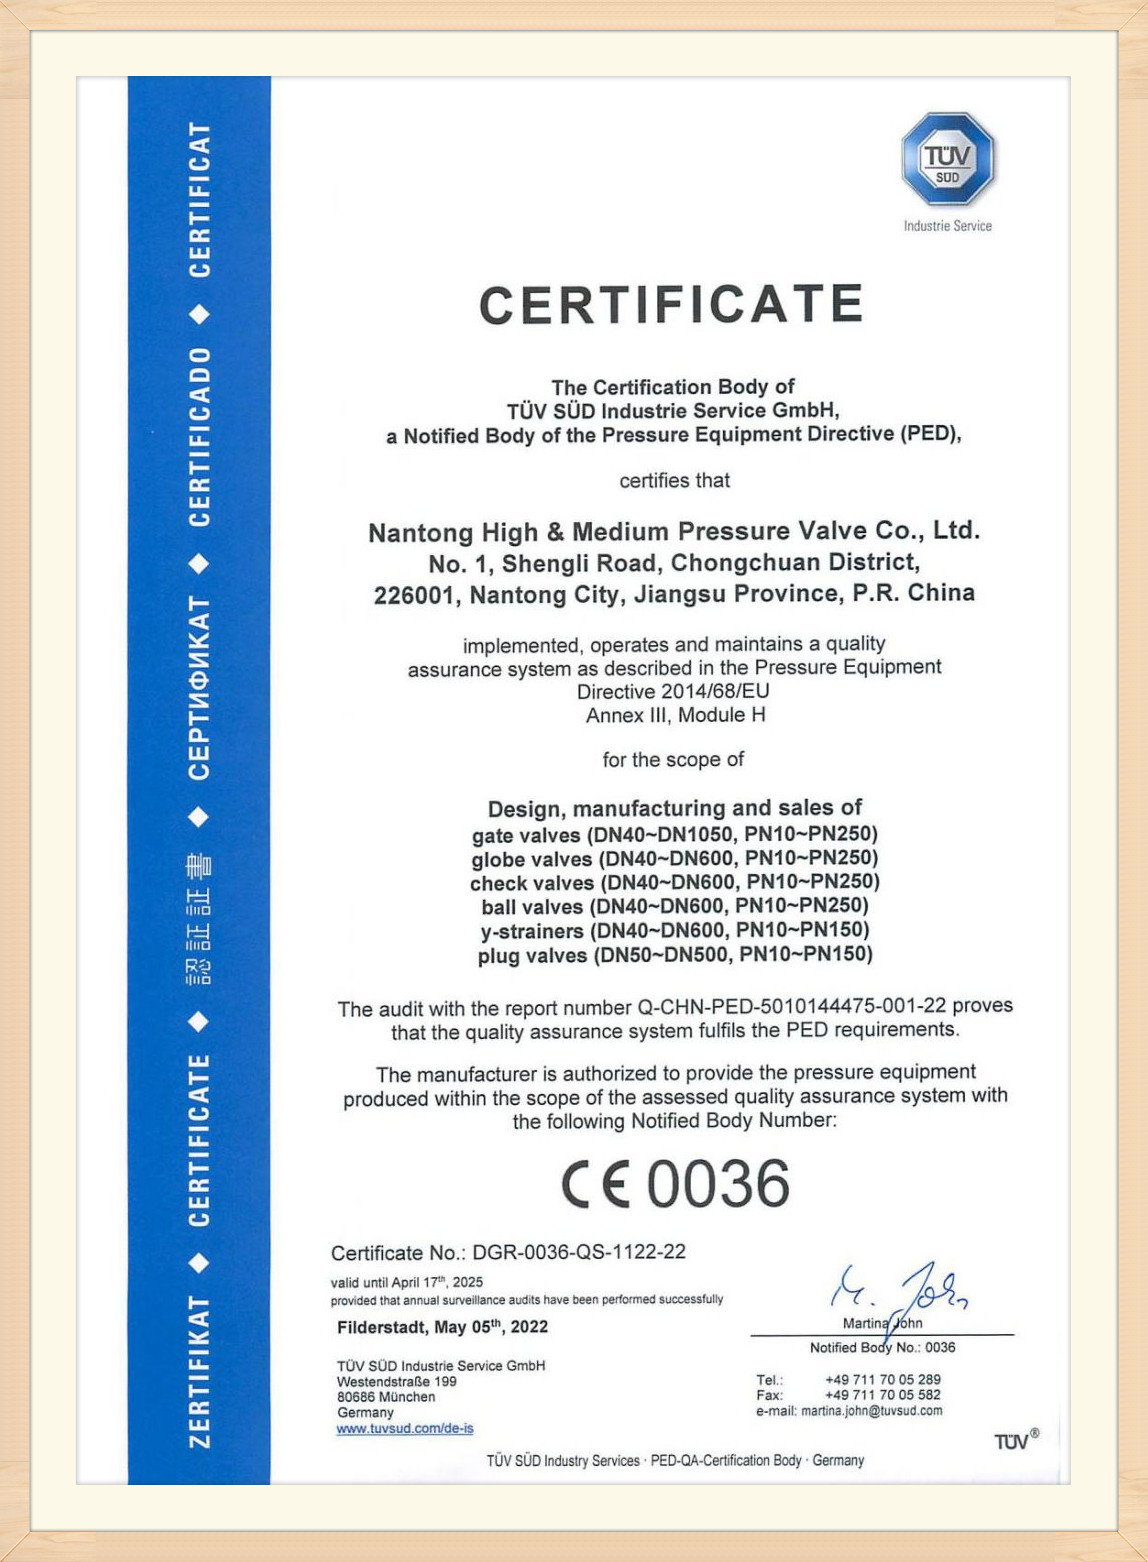 Nantong 고압 및 중간 압력 밸브 Co., Ltd.